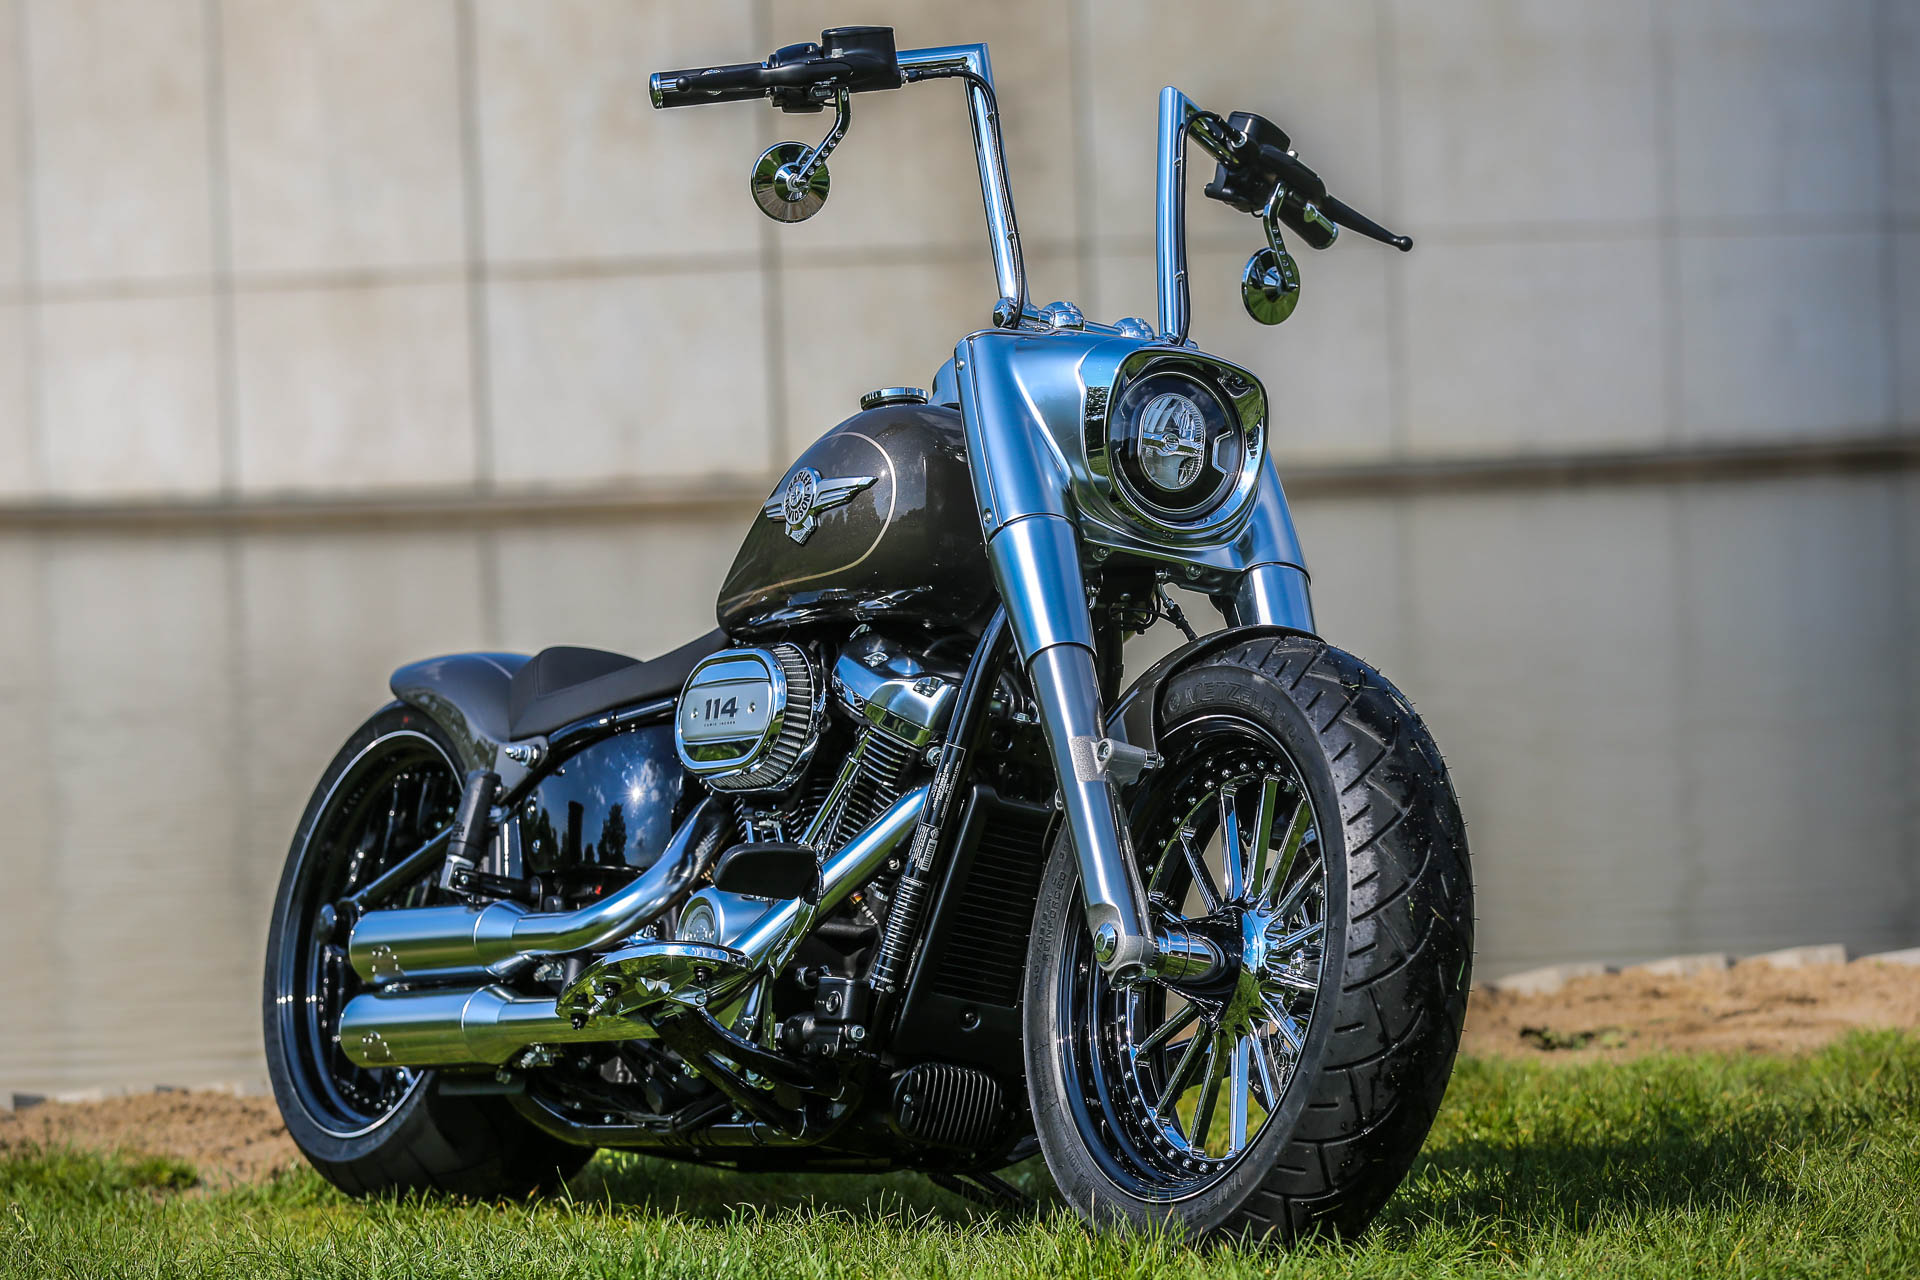 Thunderbike Phynix • H-D FLFBS Fat Boy Custom Motorcycle